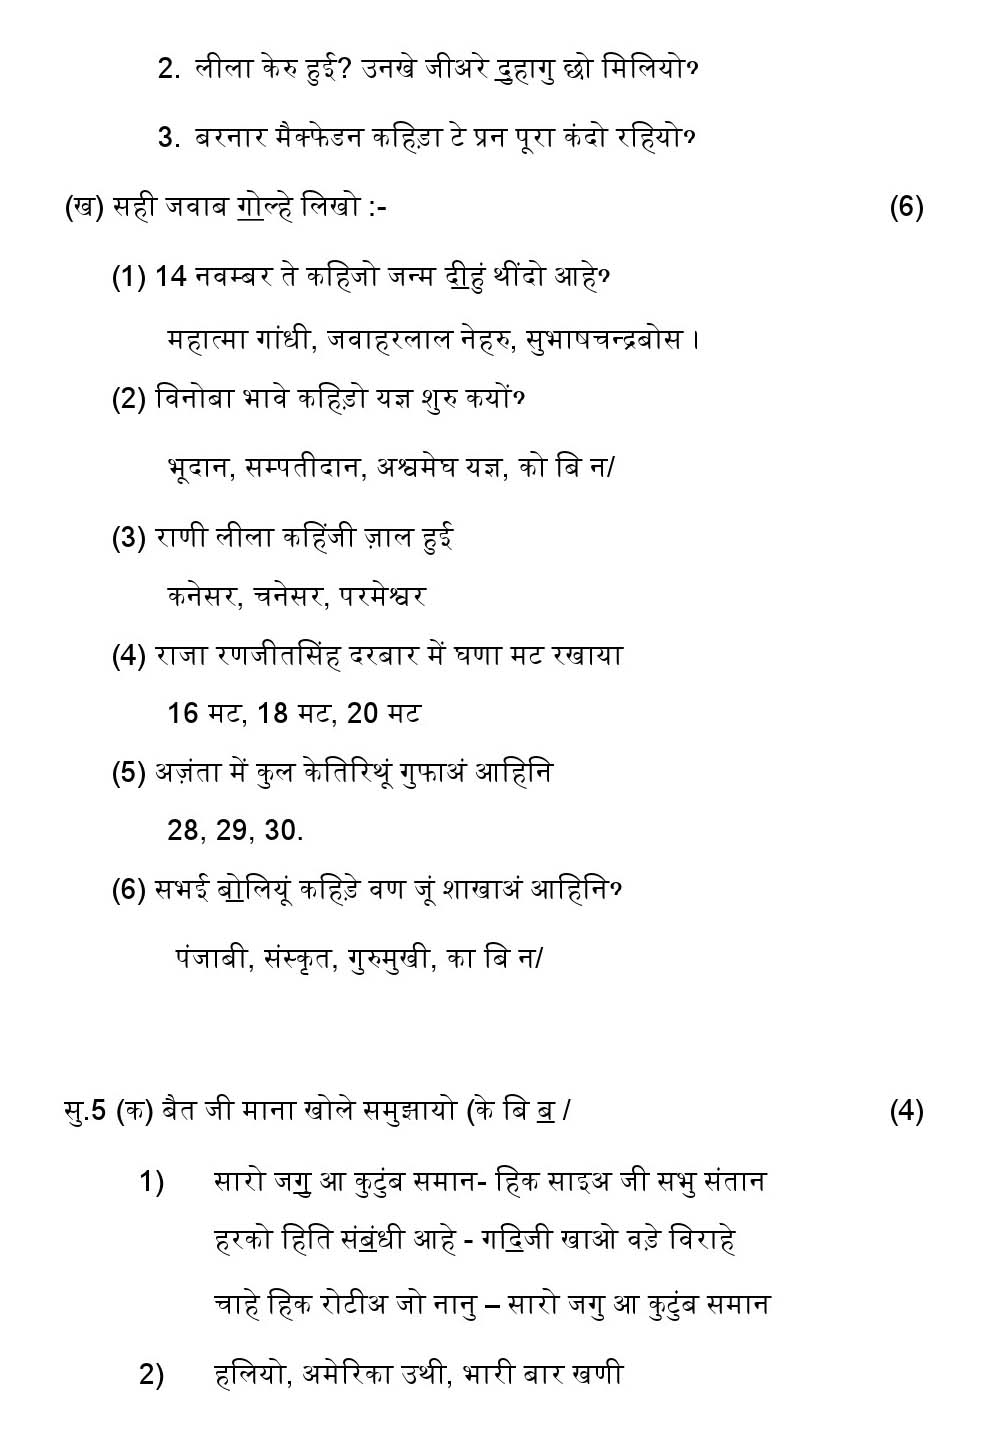 Sindhi CBSE Class X Sample Question Paper 2018-19 - Image 5